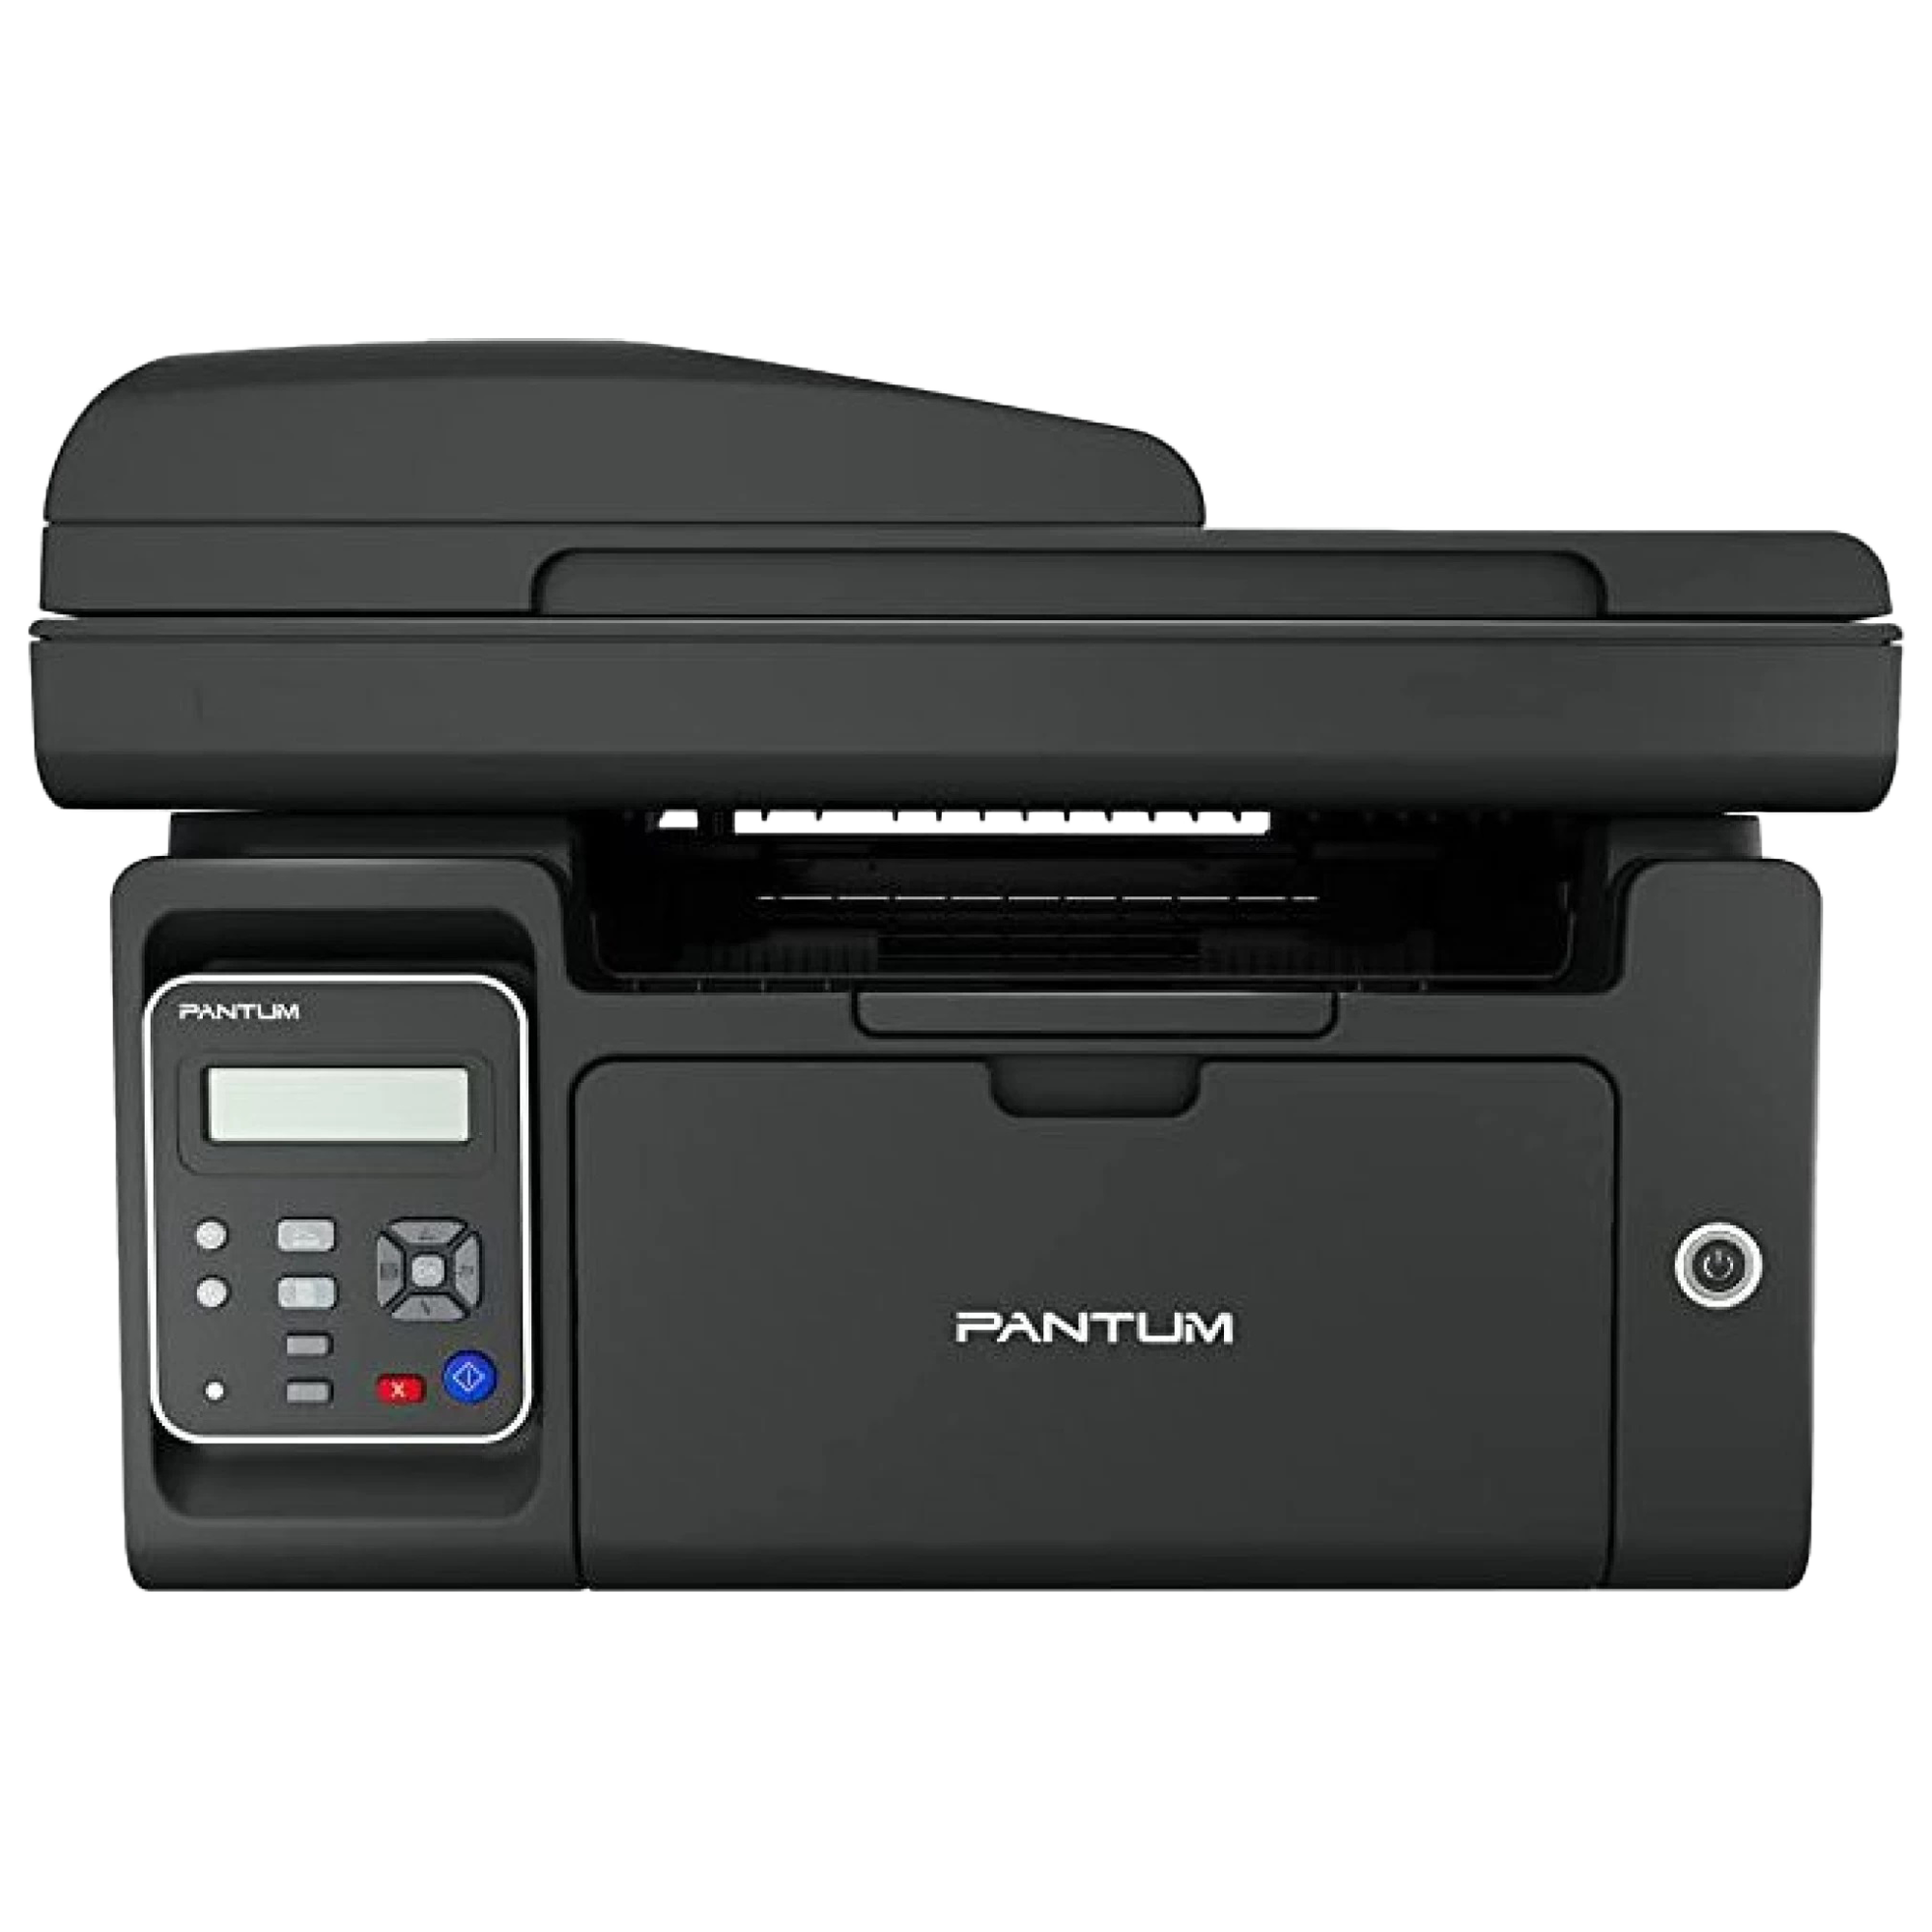 PANTUM Wireless Black & White All-in-One Inkjet Printer (Auto Duplex, M6559NW, Black)